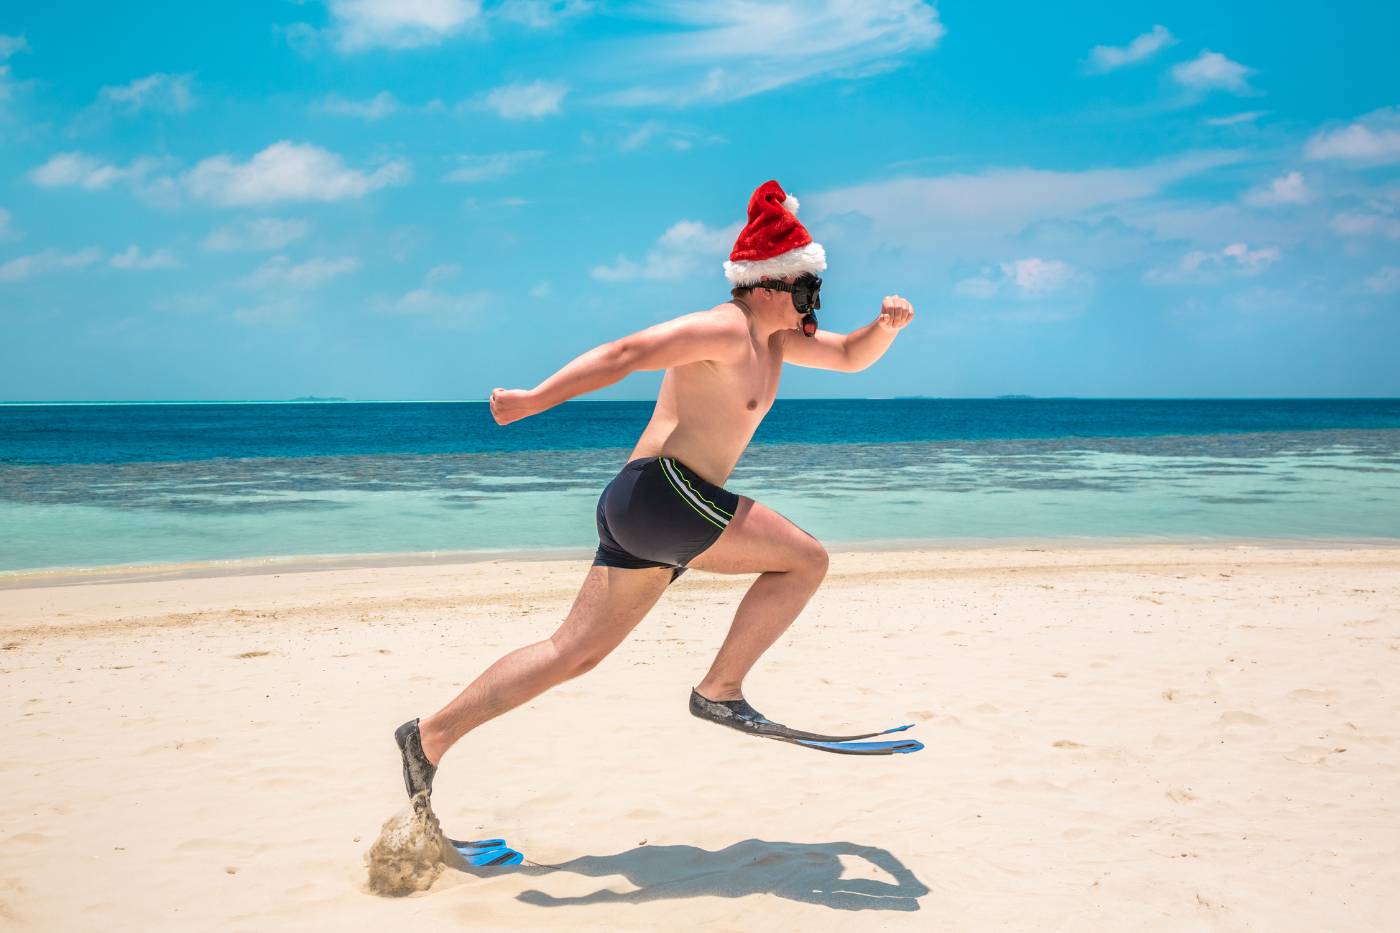 Man running across beach in Santa hat, flippers and snorkel